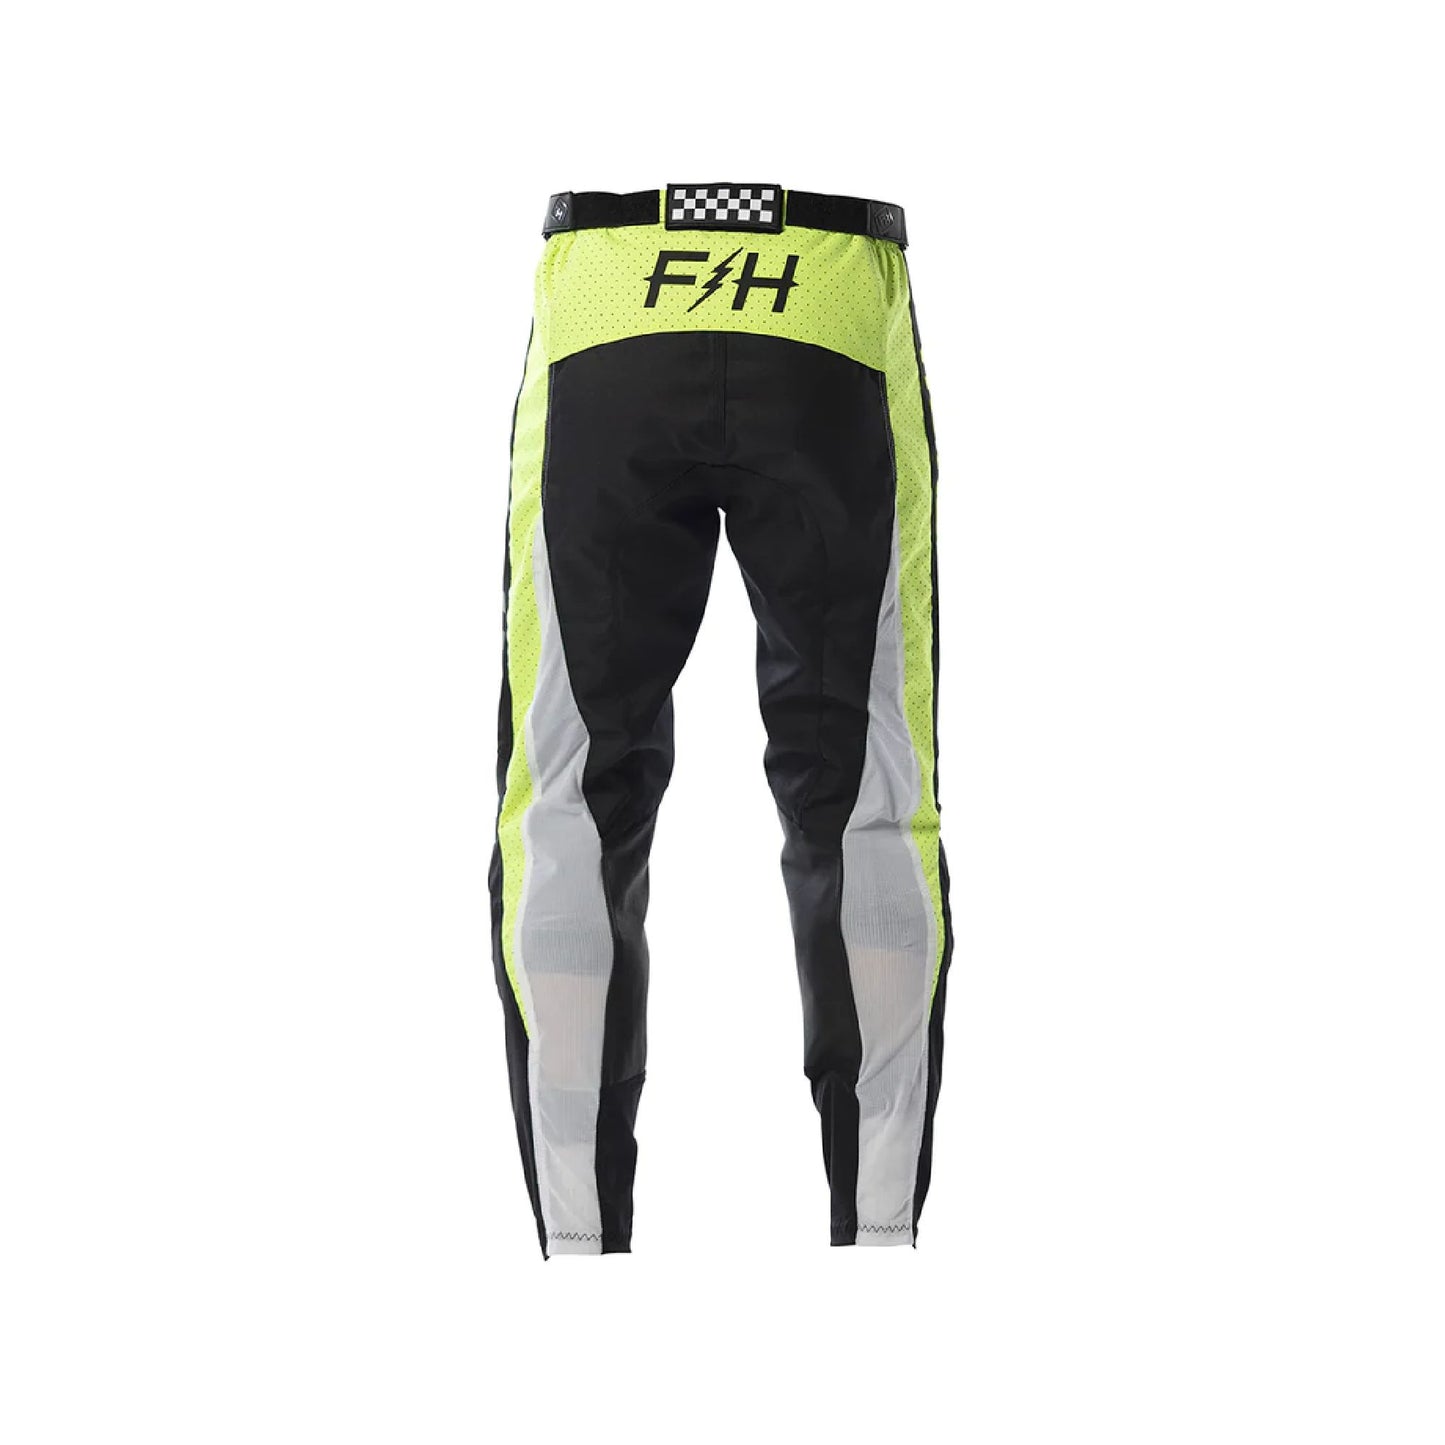 Fasthouse Youth Speed Style Pants Hi-Viz/Black Bike Pants